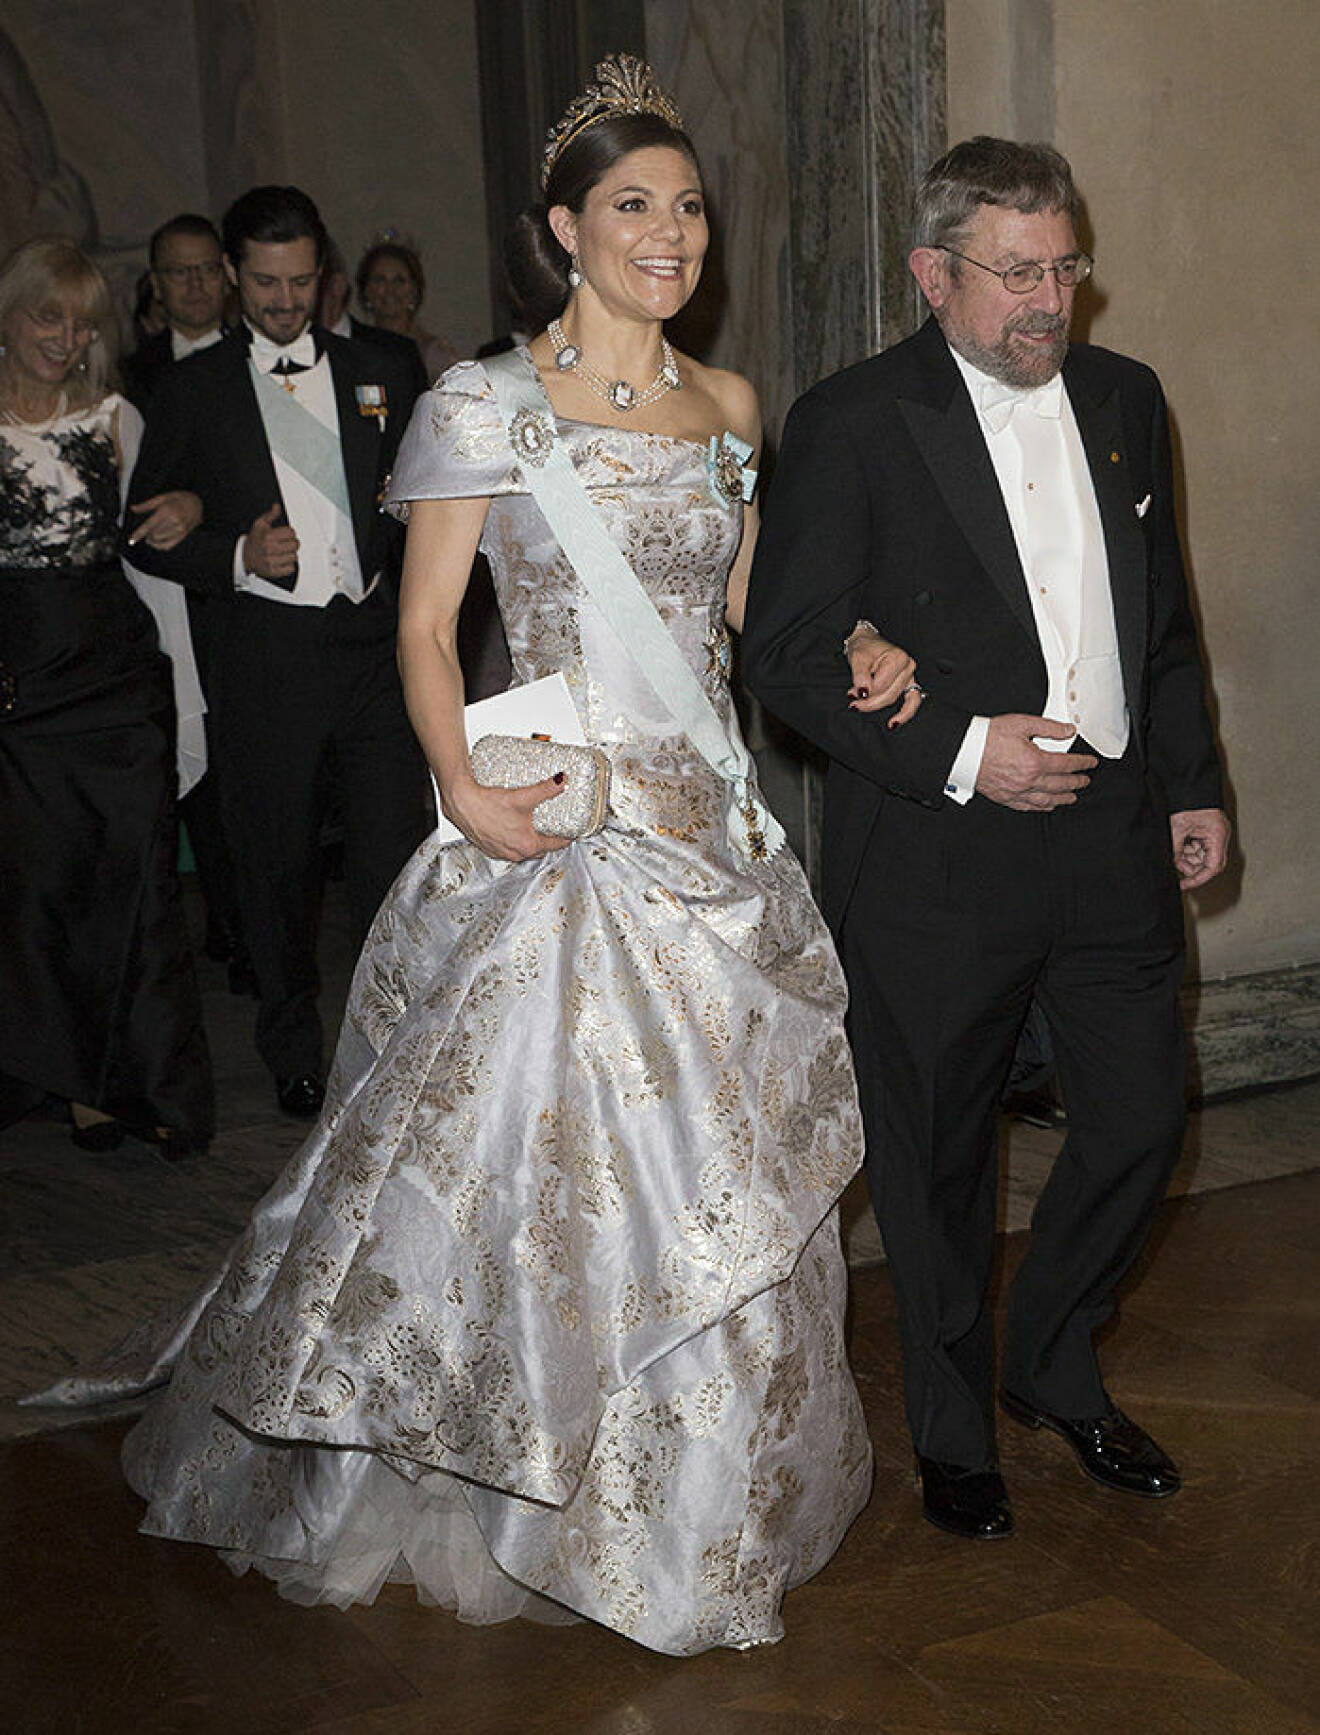 Crown princess Victoria, J. Michael Kosterlitz Nobel banquet, Stockholm City Hall, Stockholm 2016-12-10 (c) Charles Hammarsten / IBL Nobelbanketten, Stockholms Stadshus 2016-12-10